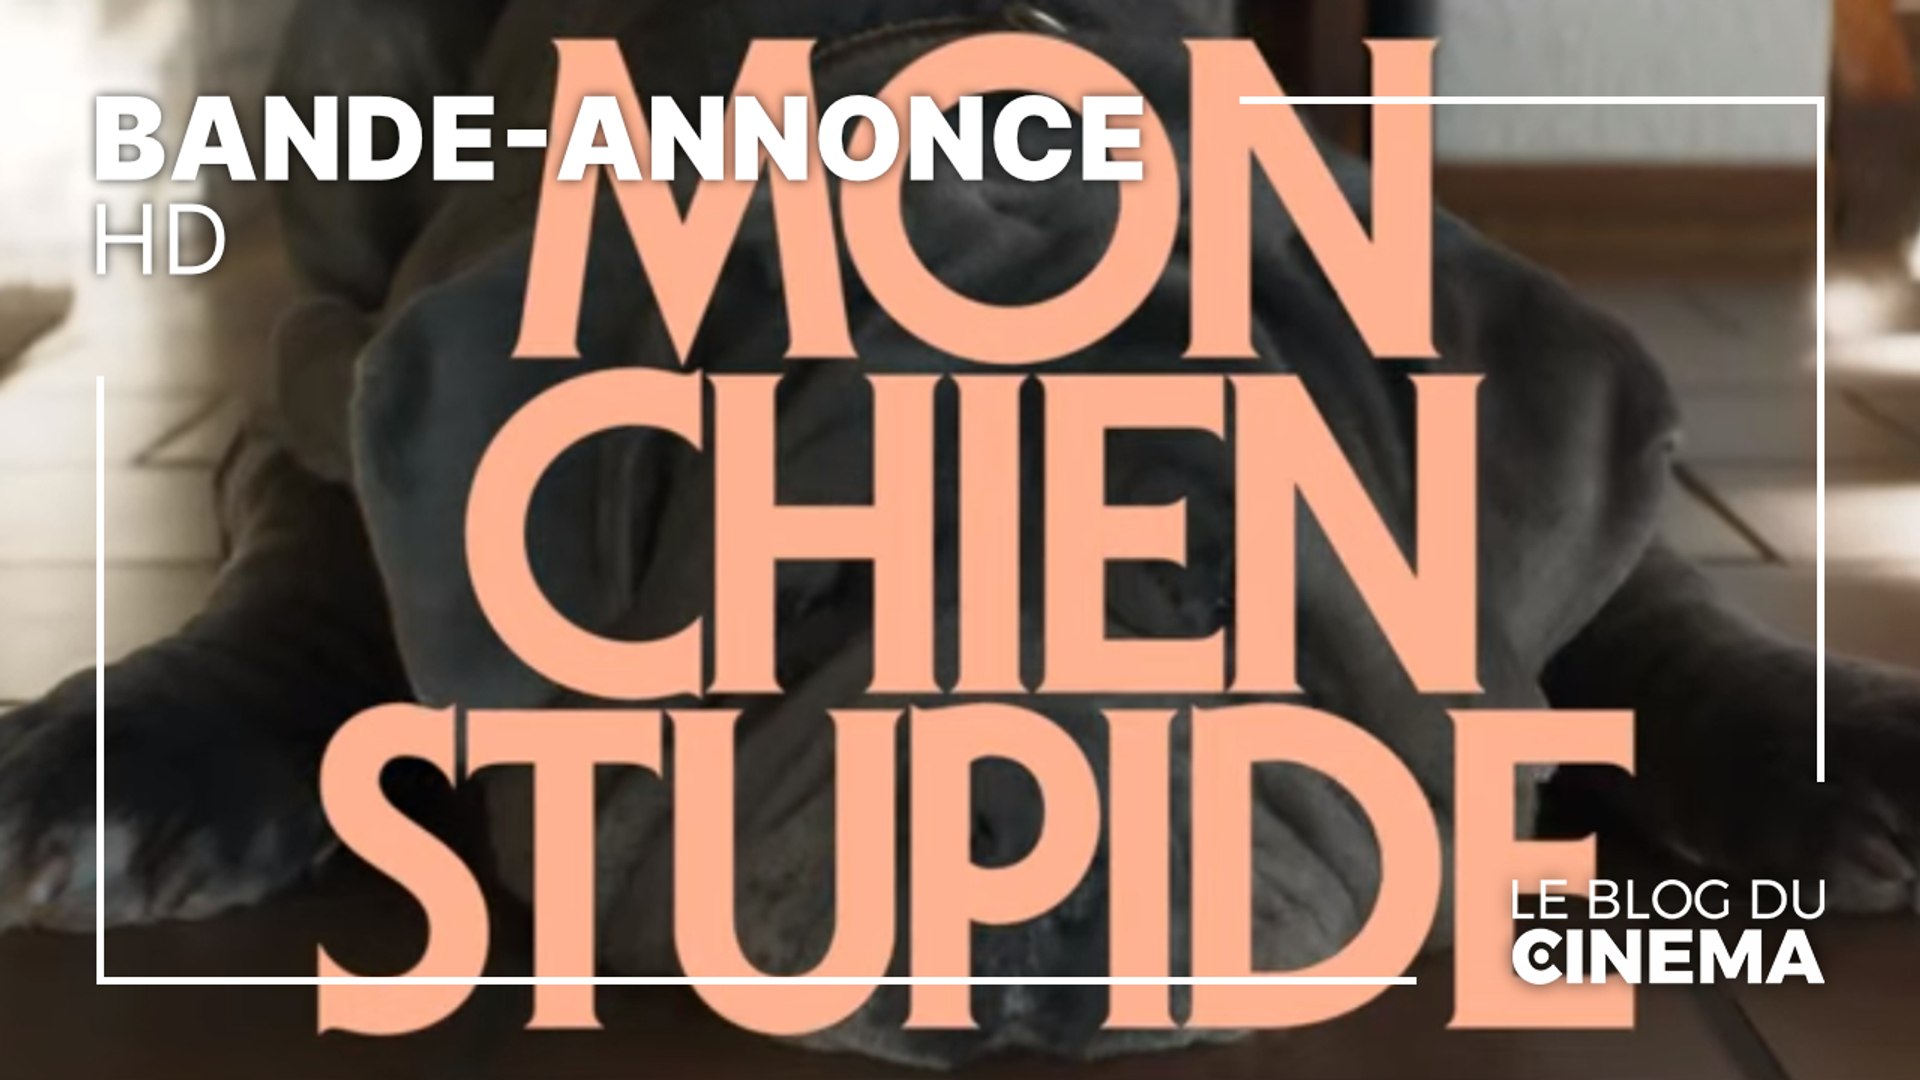 MON CHIEN STUPIDE : bande-annonce [HD] - Vidéo Dailymotion